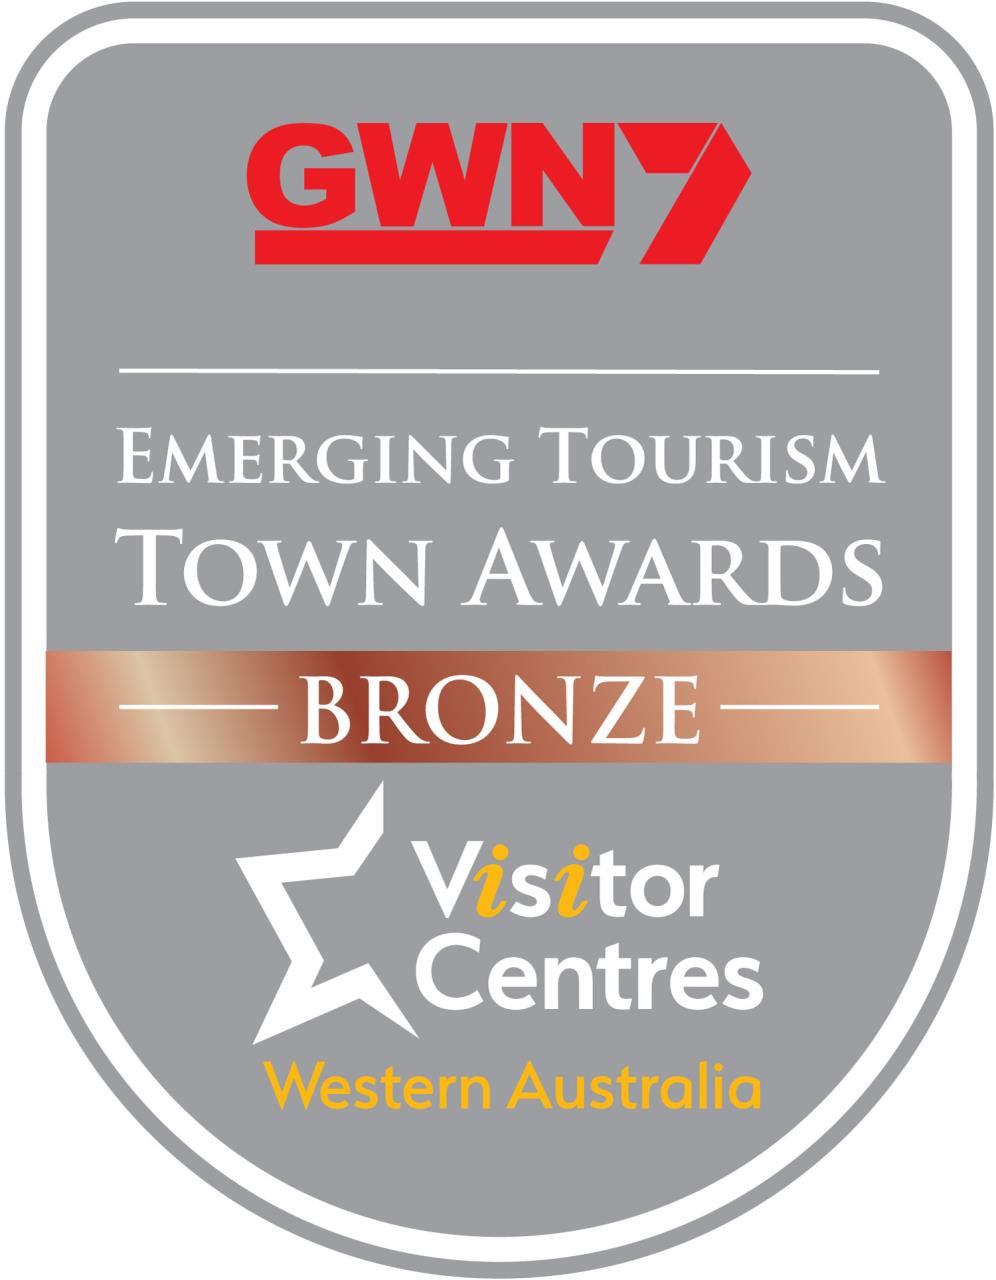 Emerging Tourism Town Awards Bronze